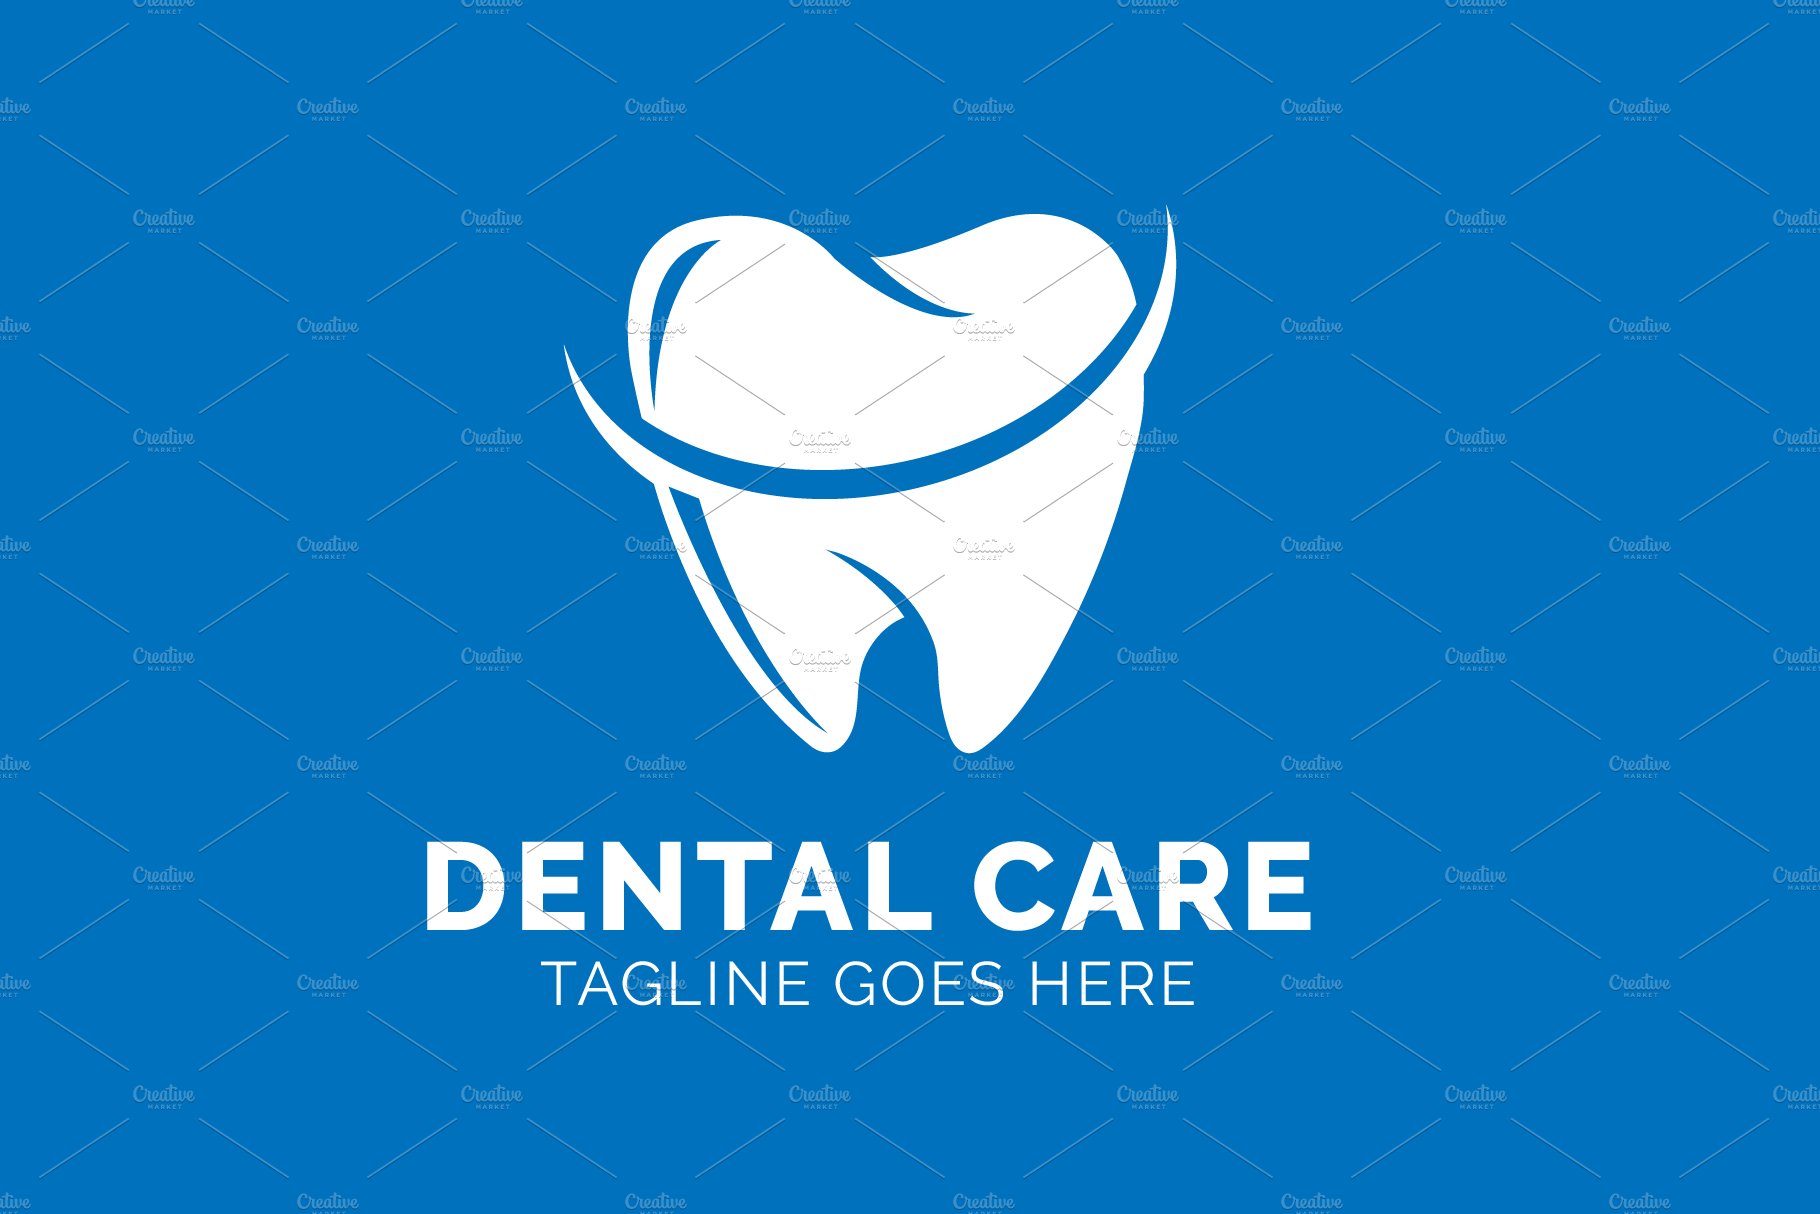 Dental Care Logo preview image.